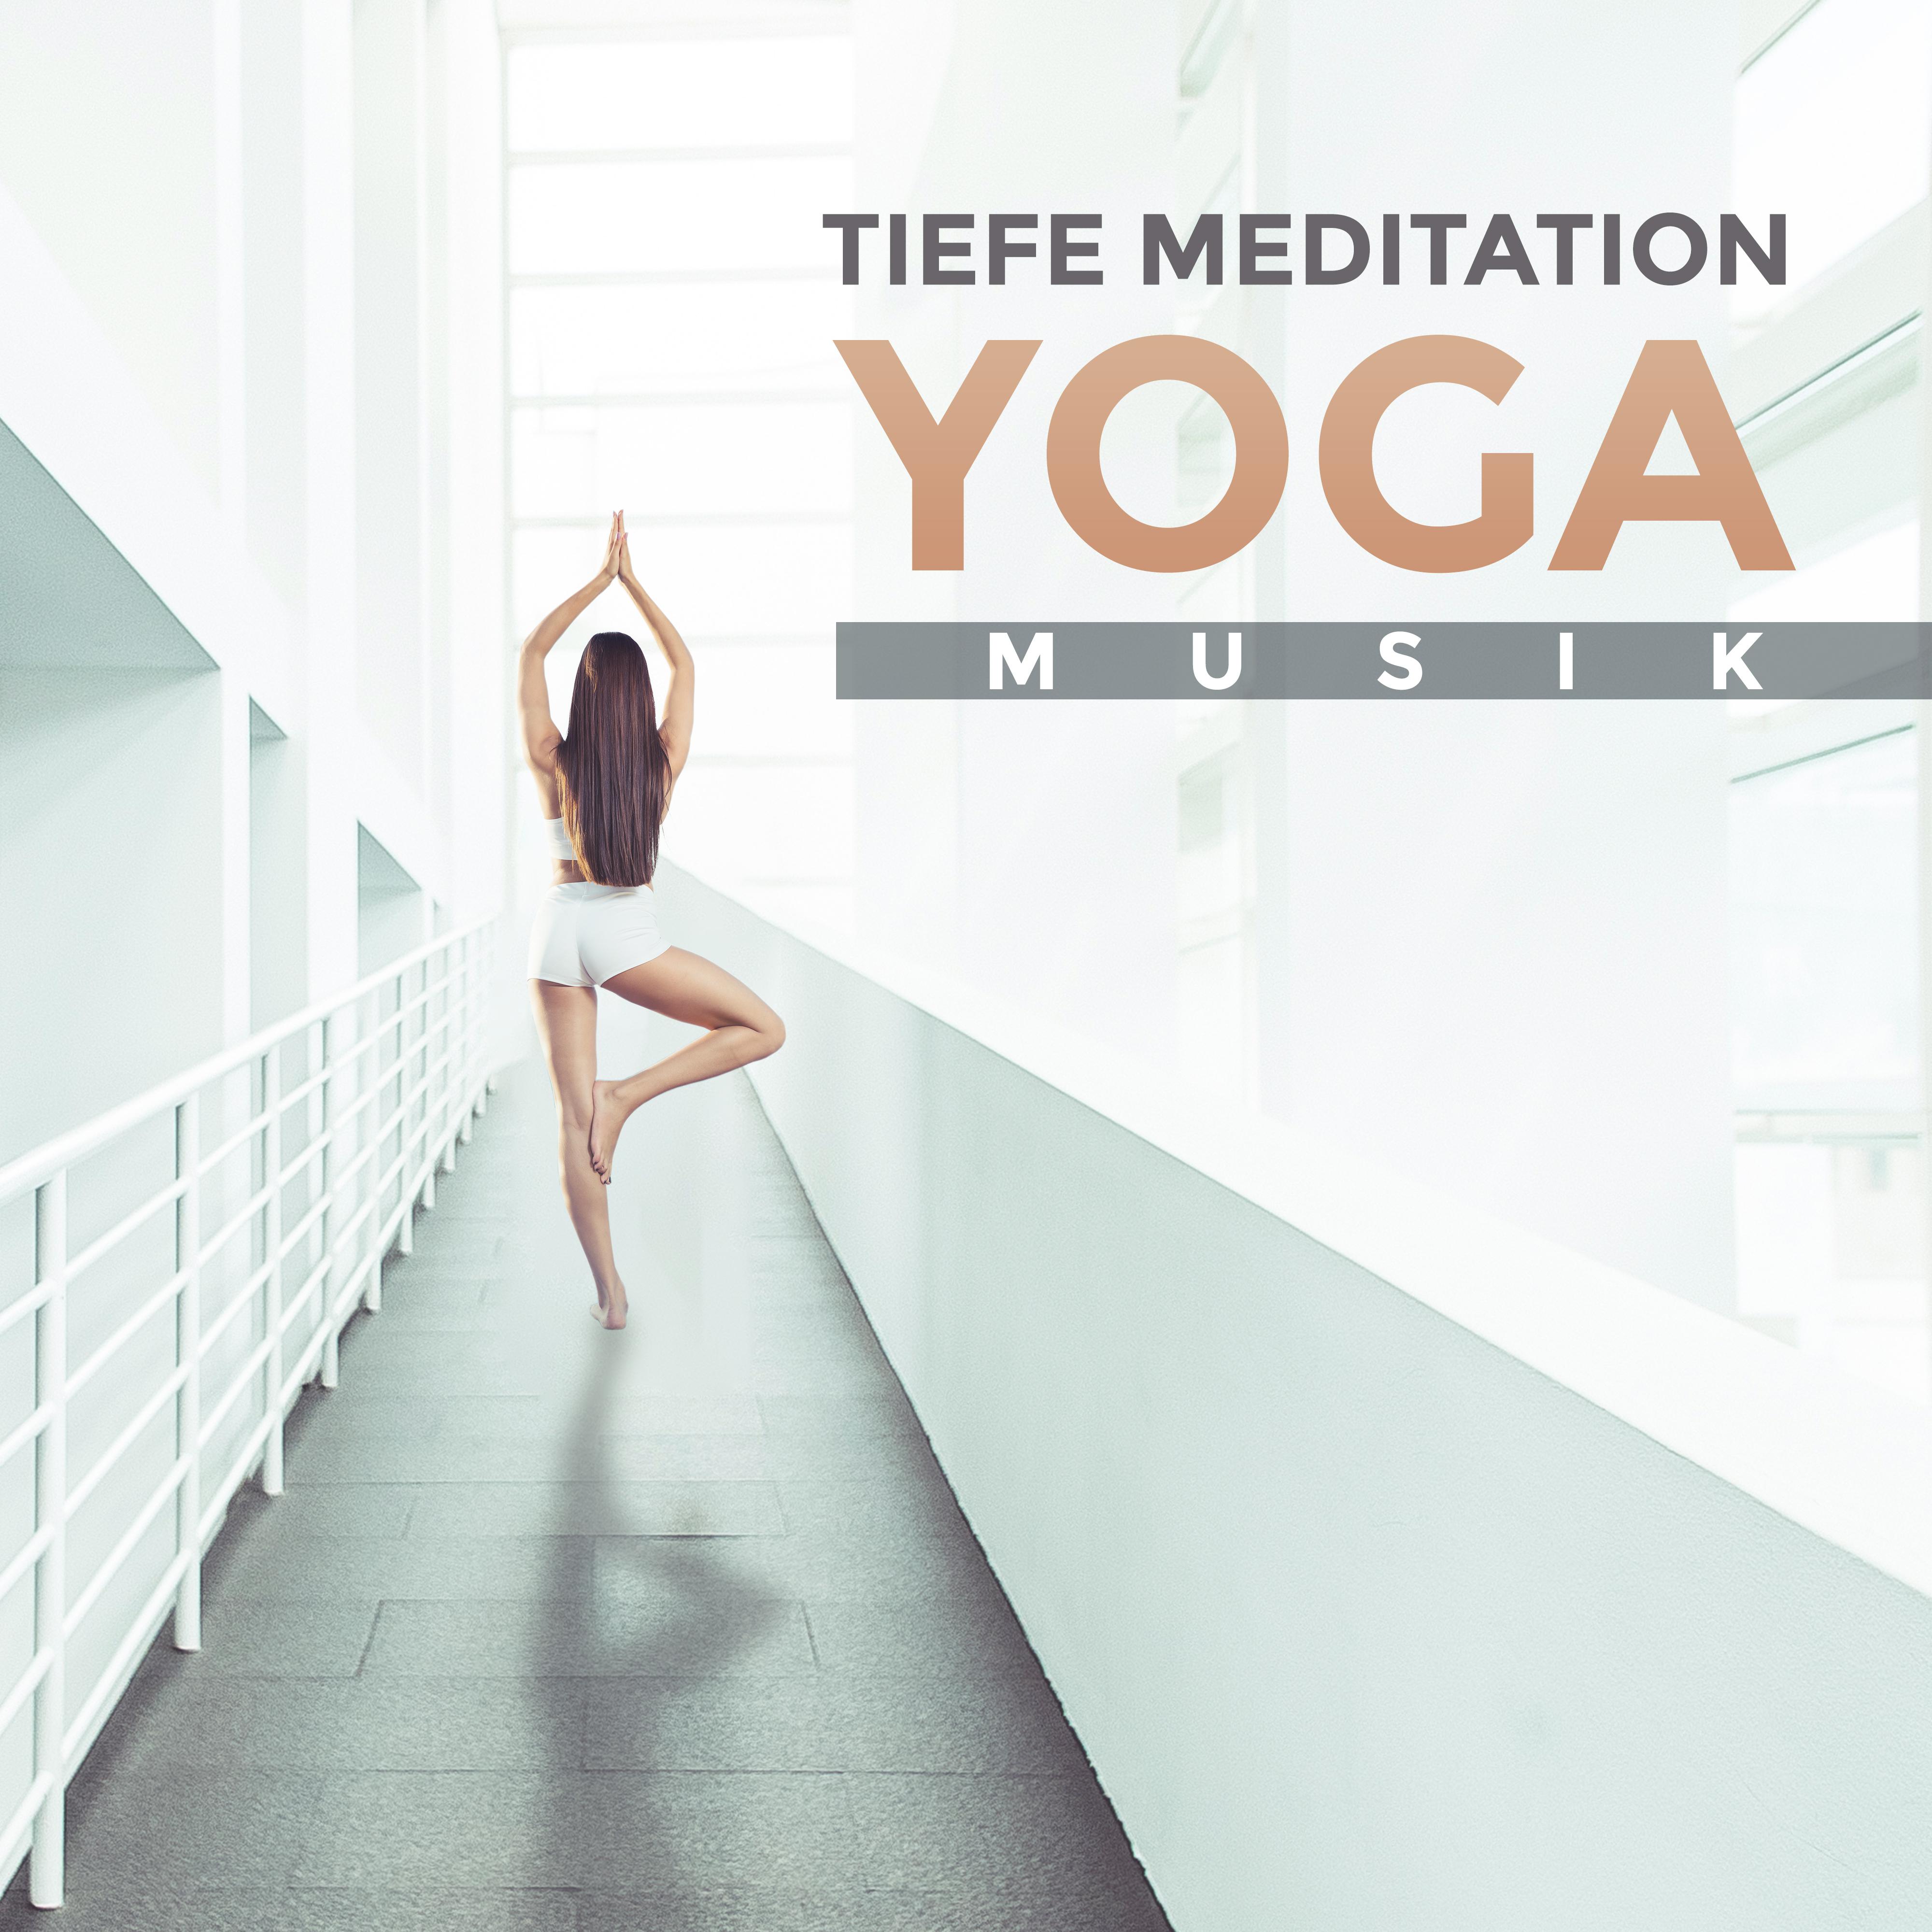 Tiefe Meditation Yoga Musik